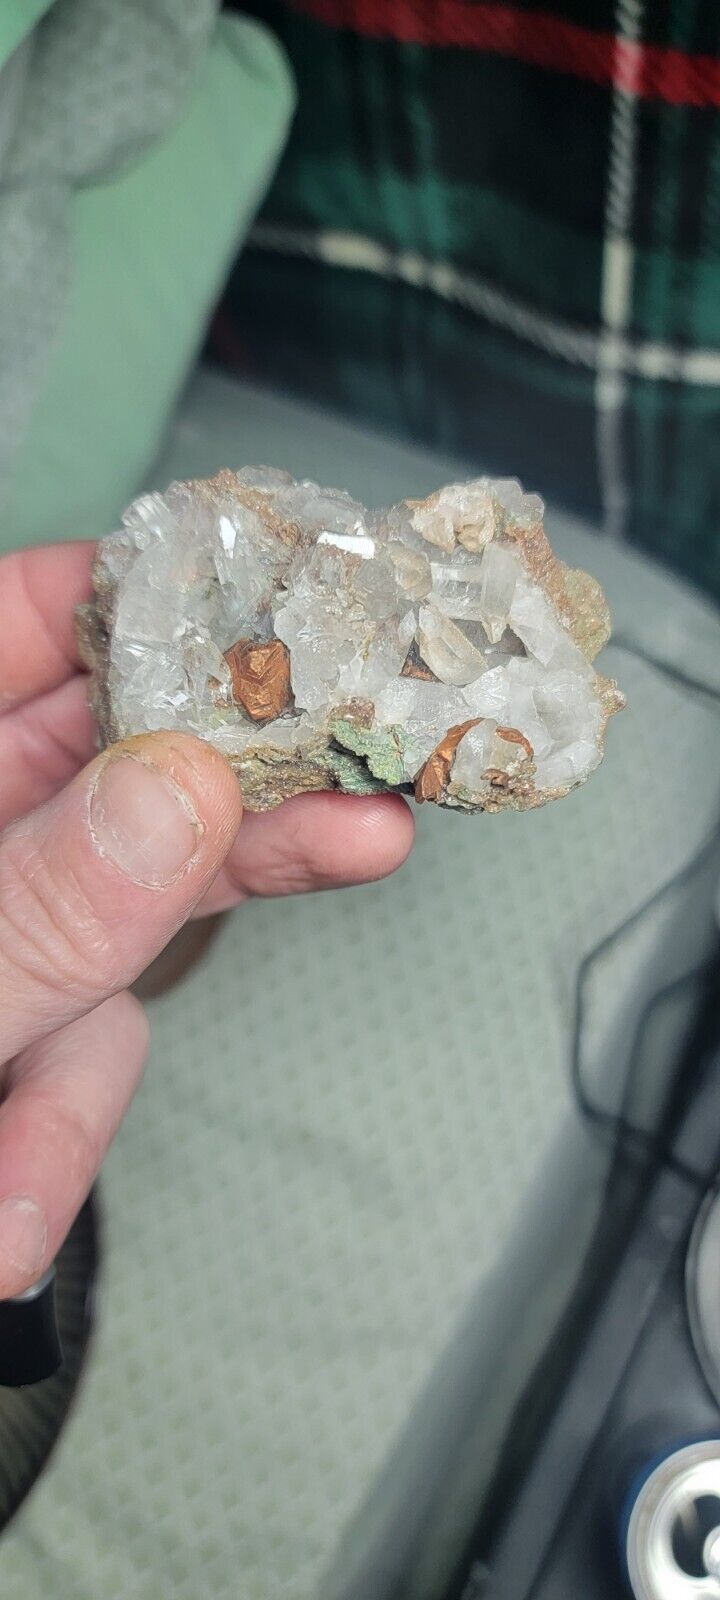 Awesome Native Copper In Quartz Crystals. Keweenaw Peninsula, Michigan 